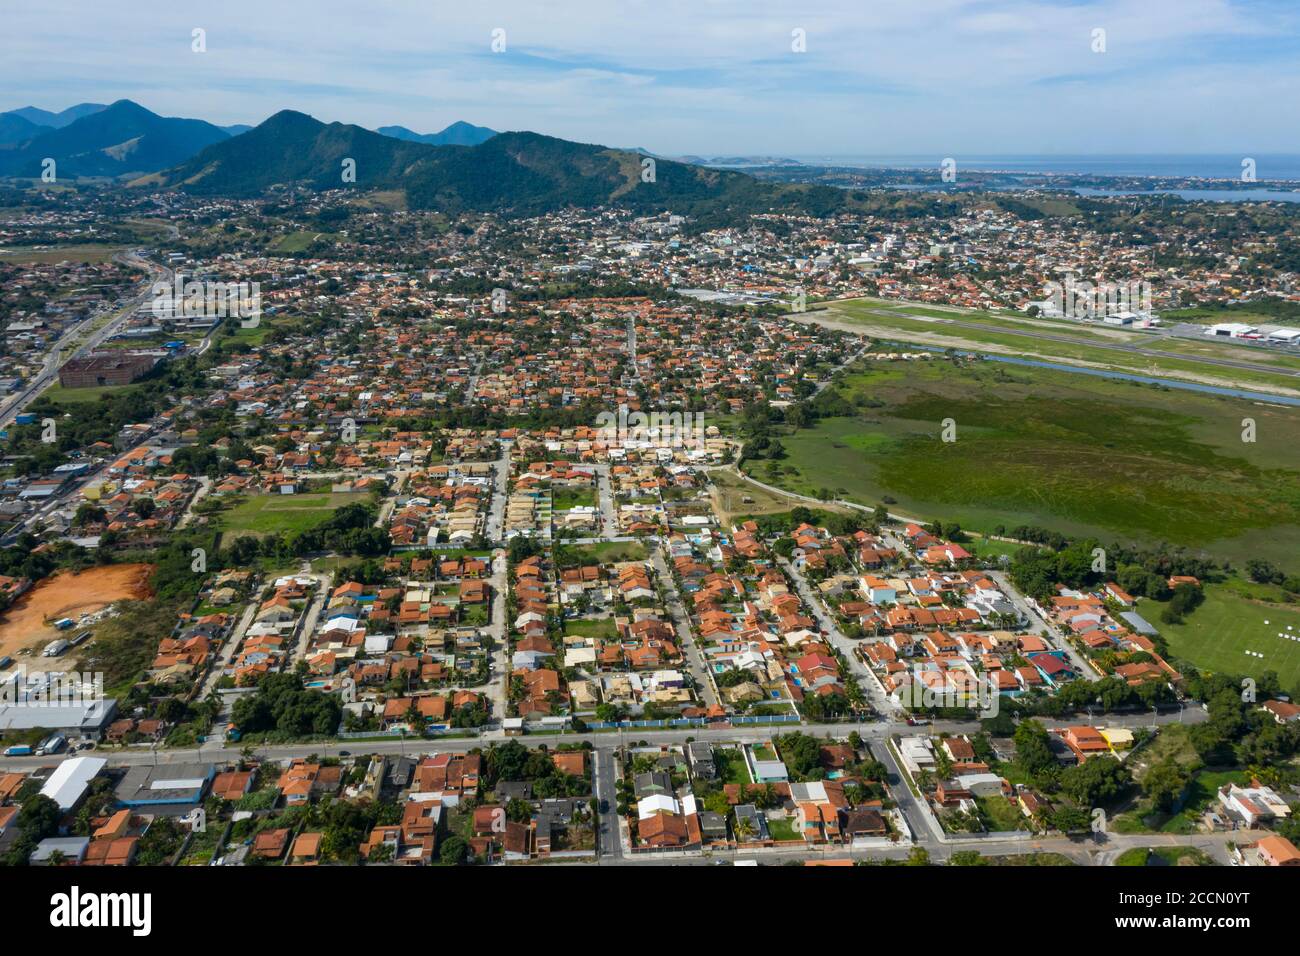 The city of Marica, State of Rio de Janeiro, Brazil. Stock Photo